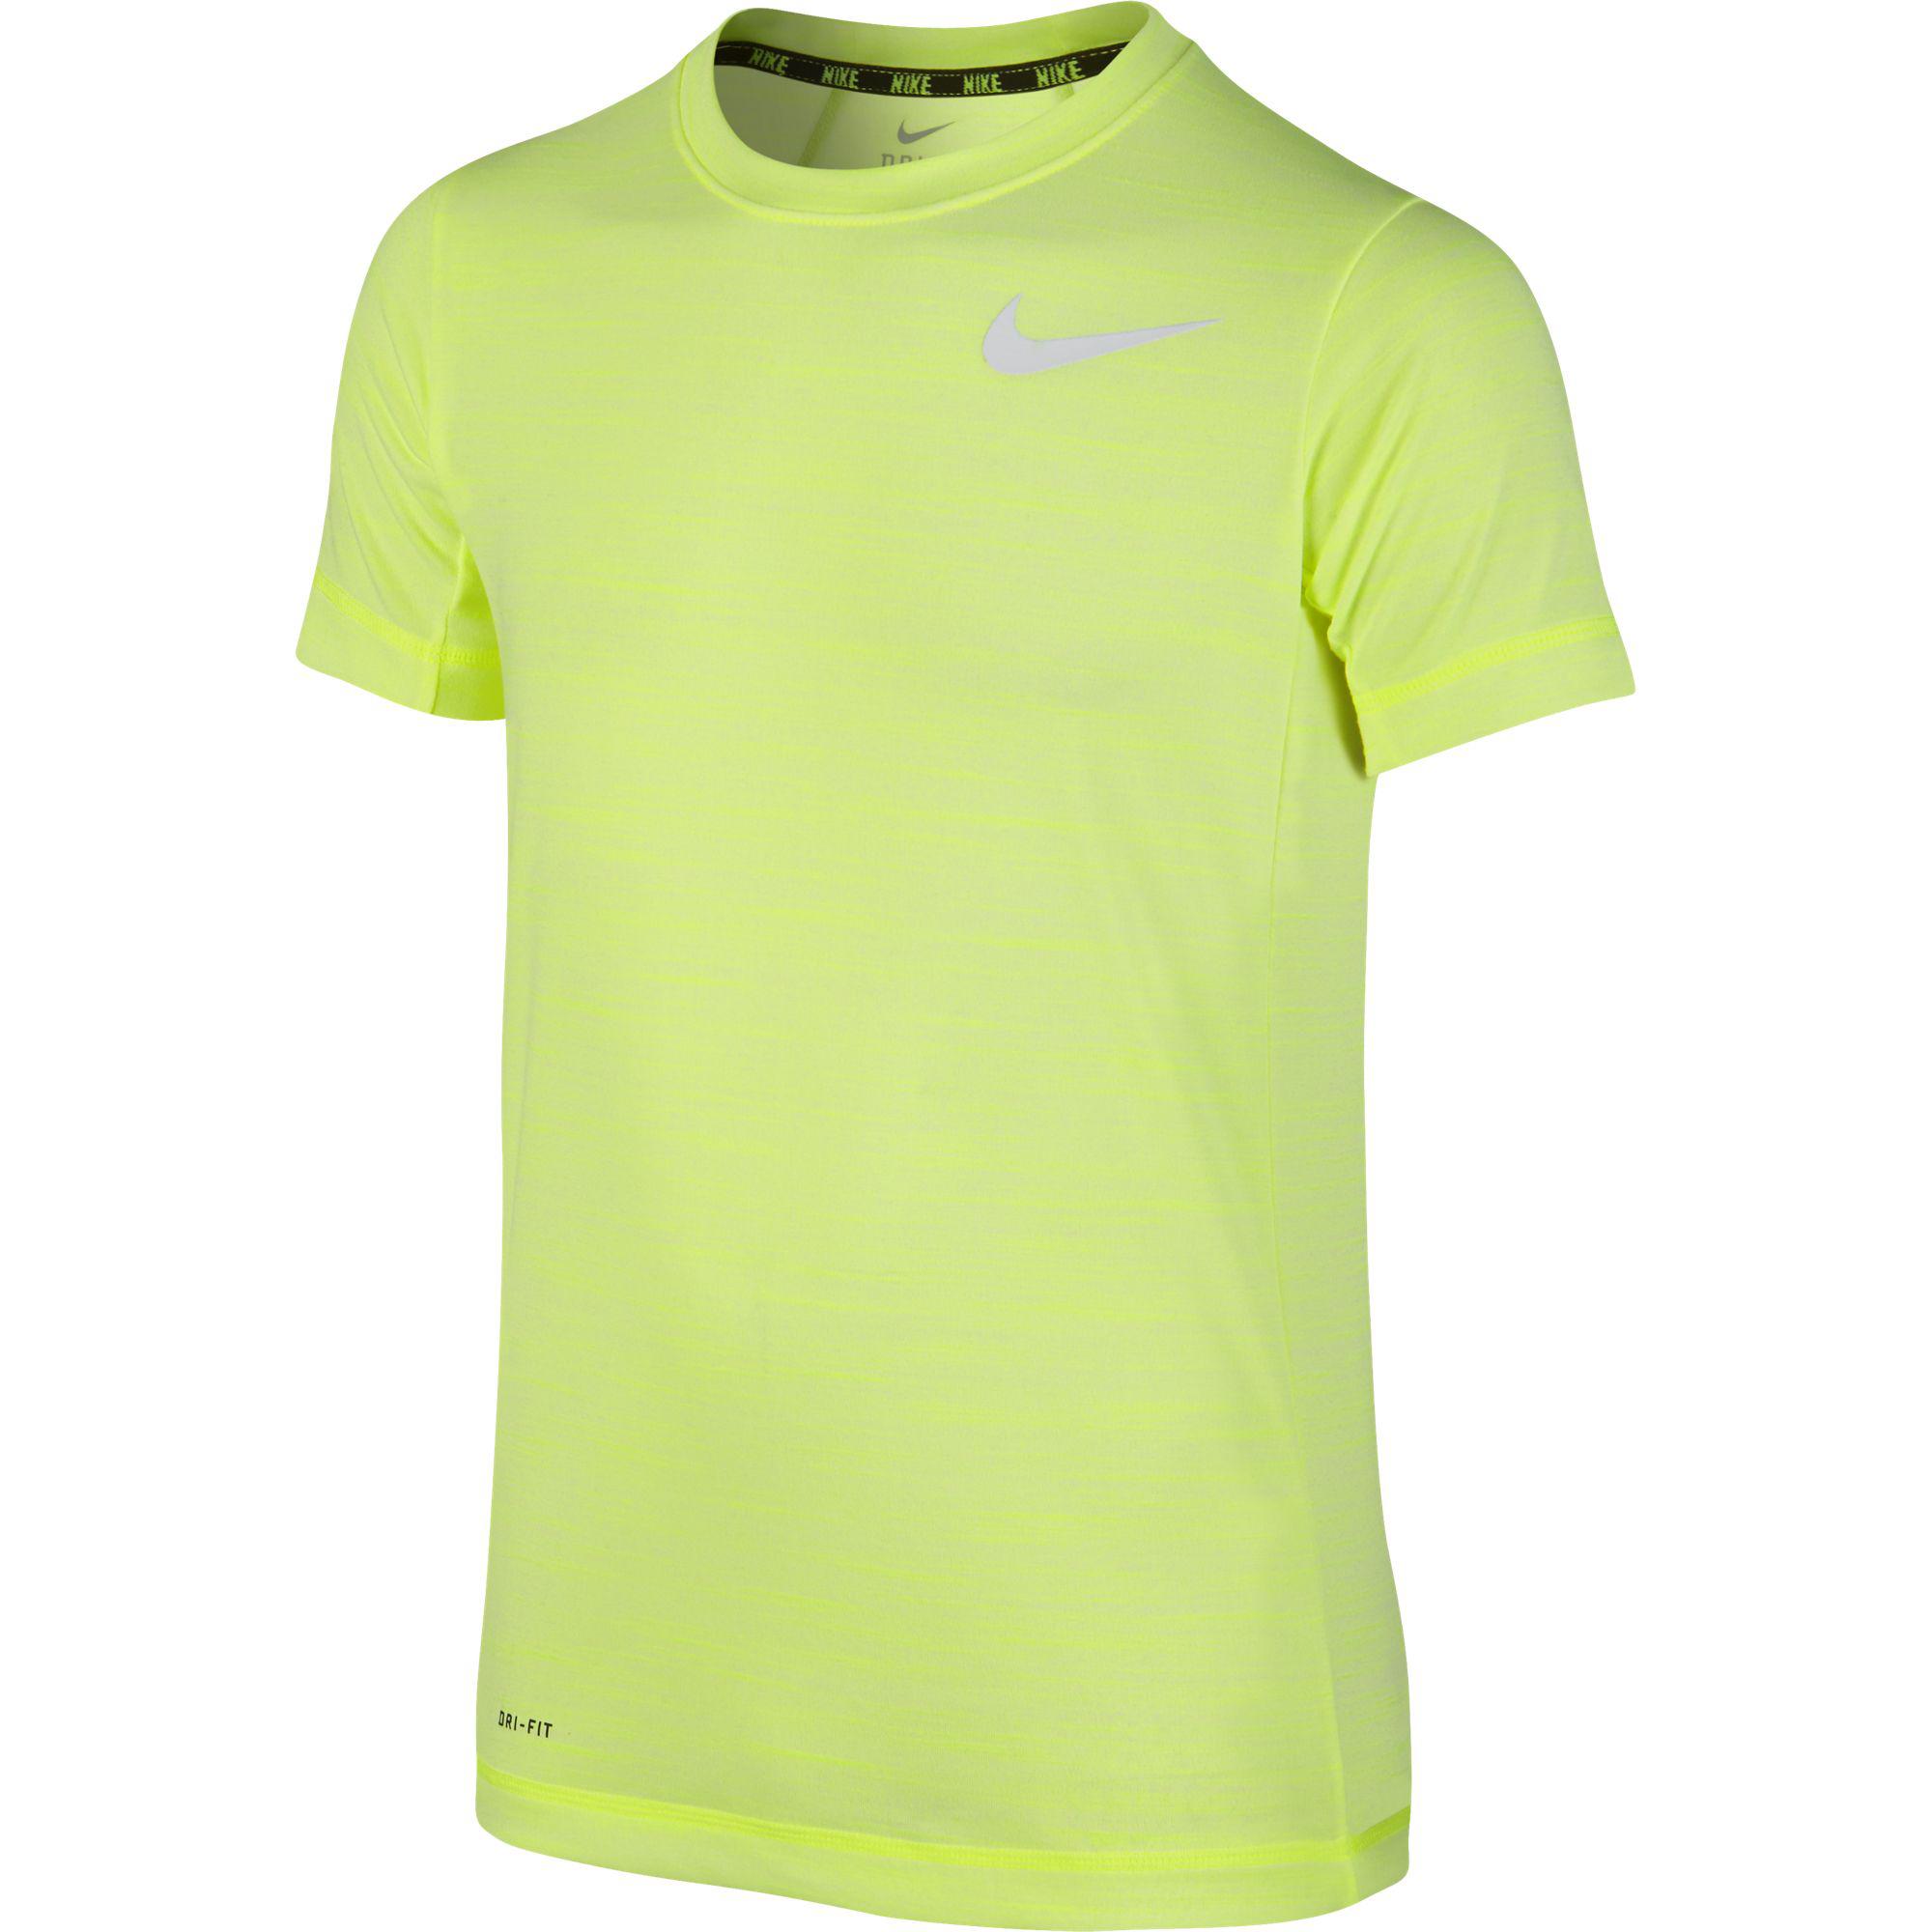 Nike Boys Dri-FIT Cool Training Shirt - Volt/White - Tennisnuts.com